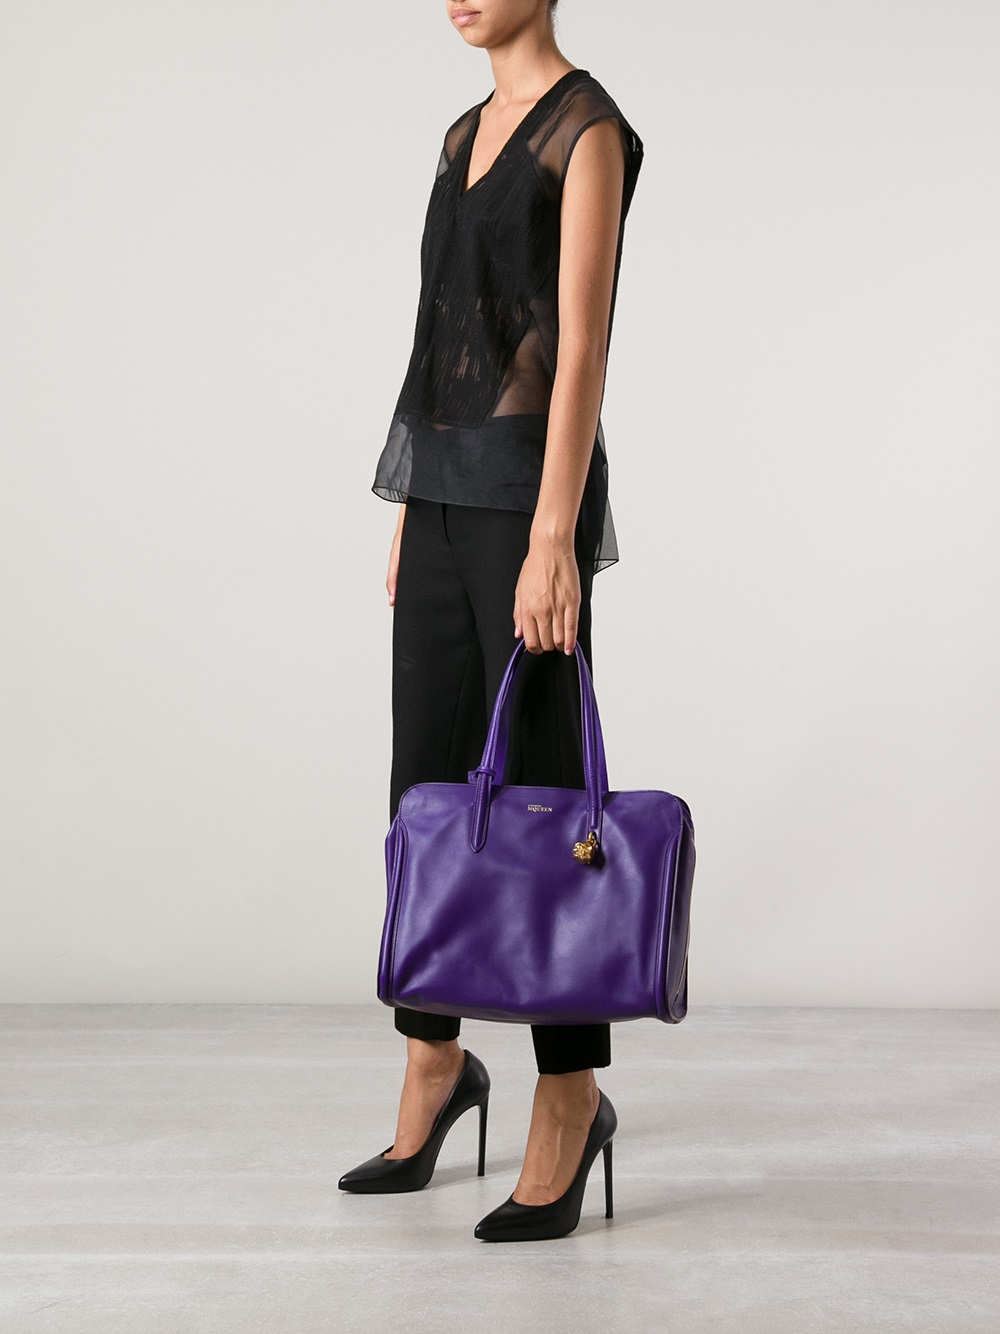 Lyst - Alexander McQueen Tote Bag in Purple